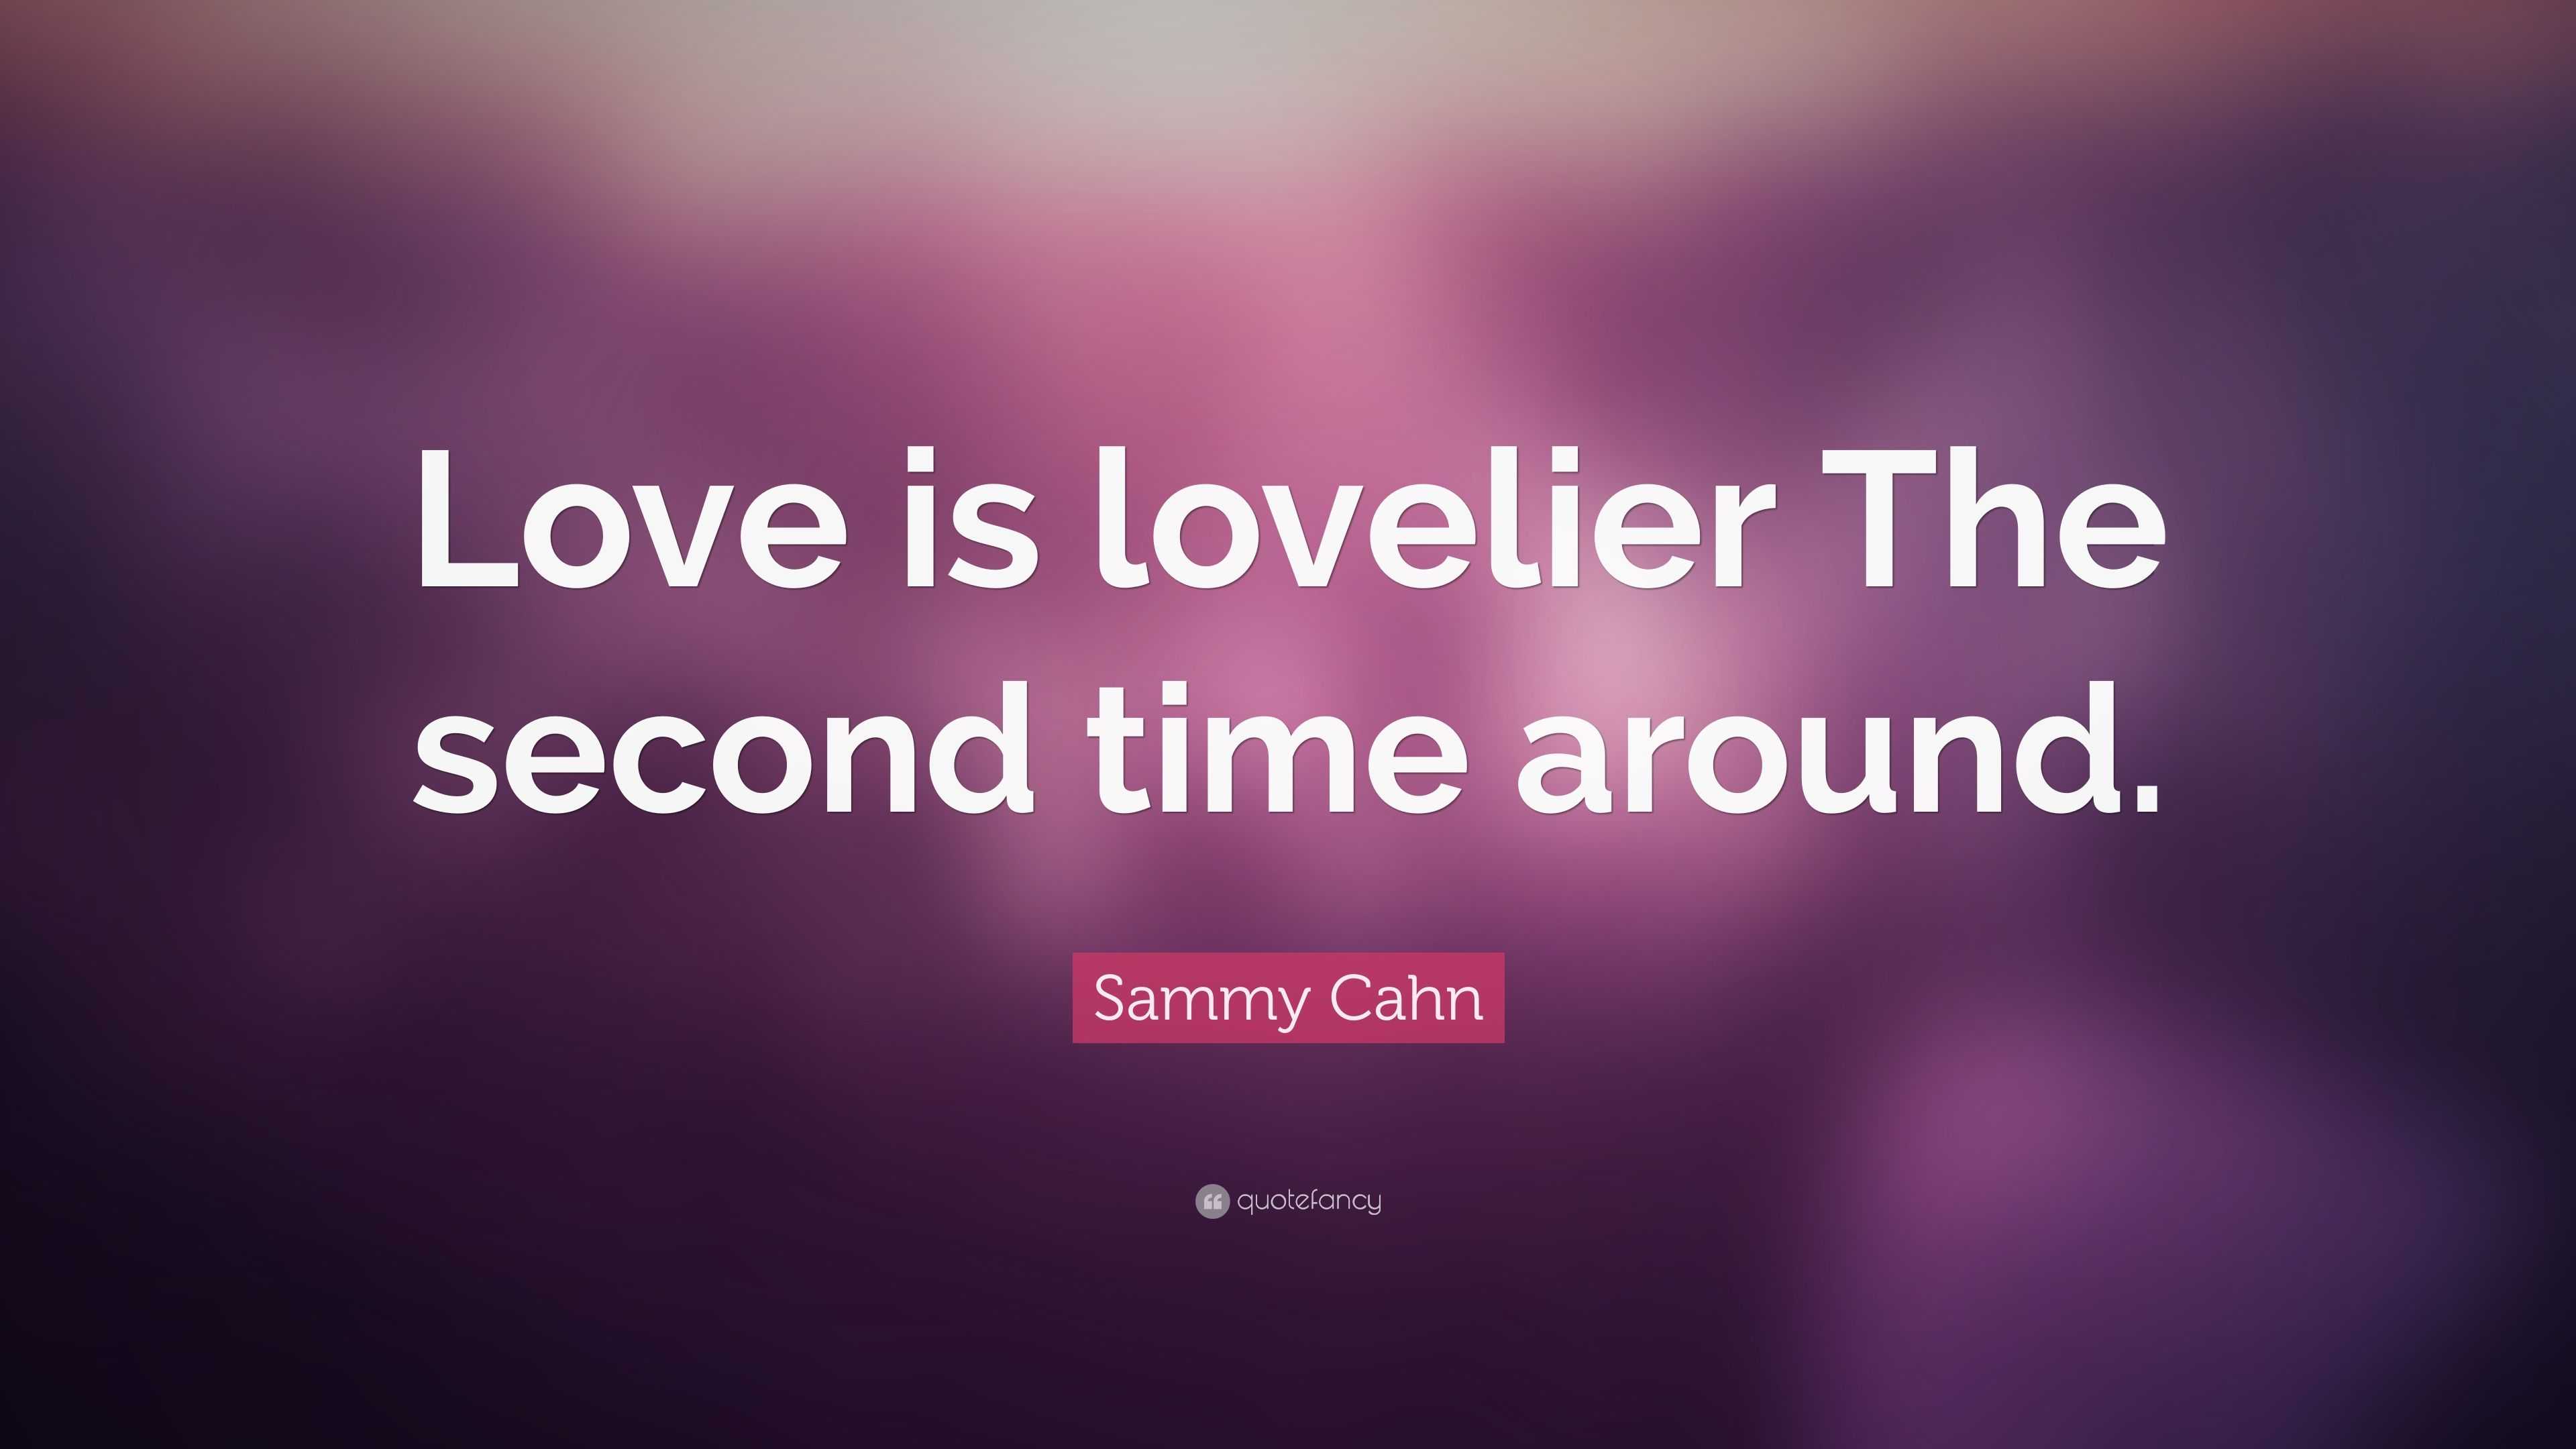 Sammy Cahn Quote Love is lovelier The second time around 9